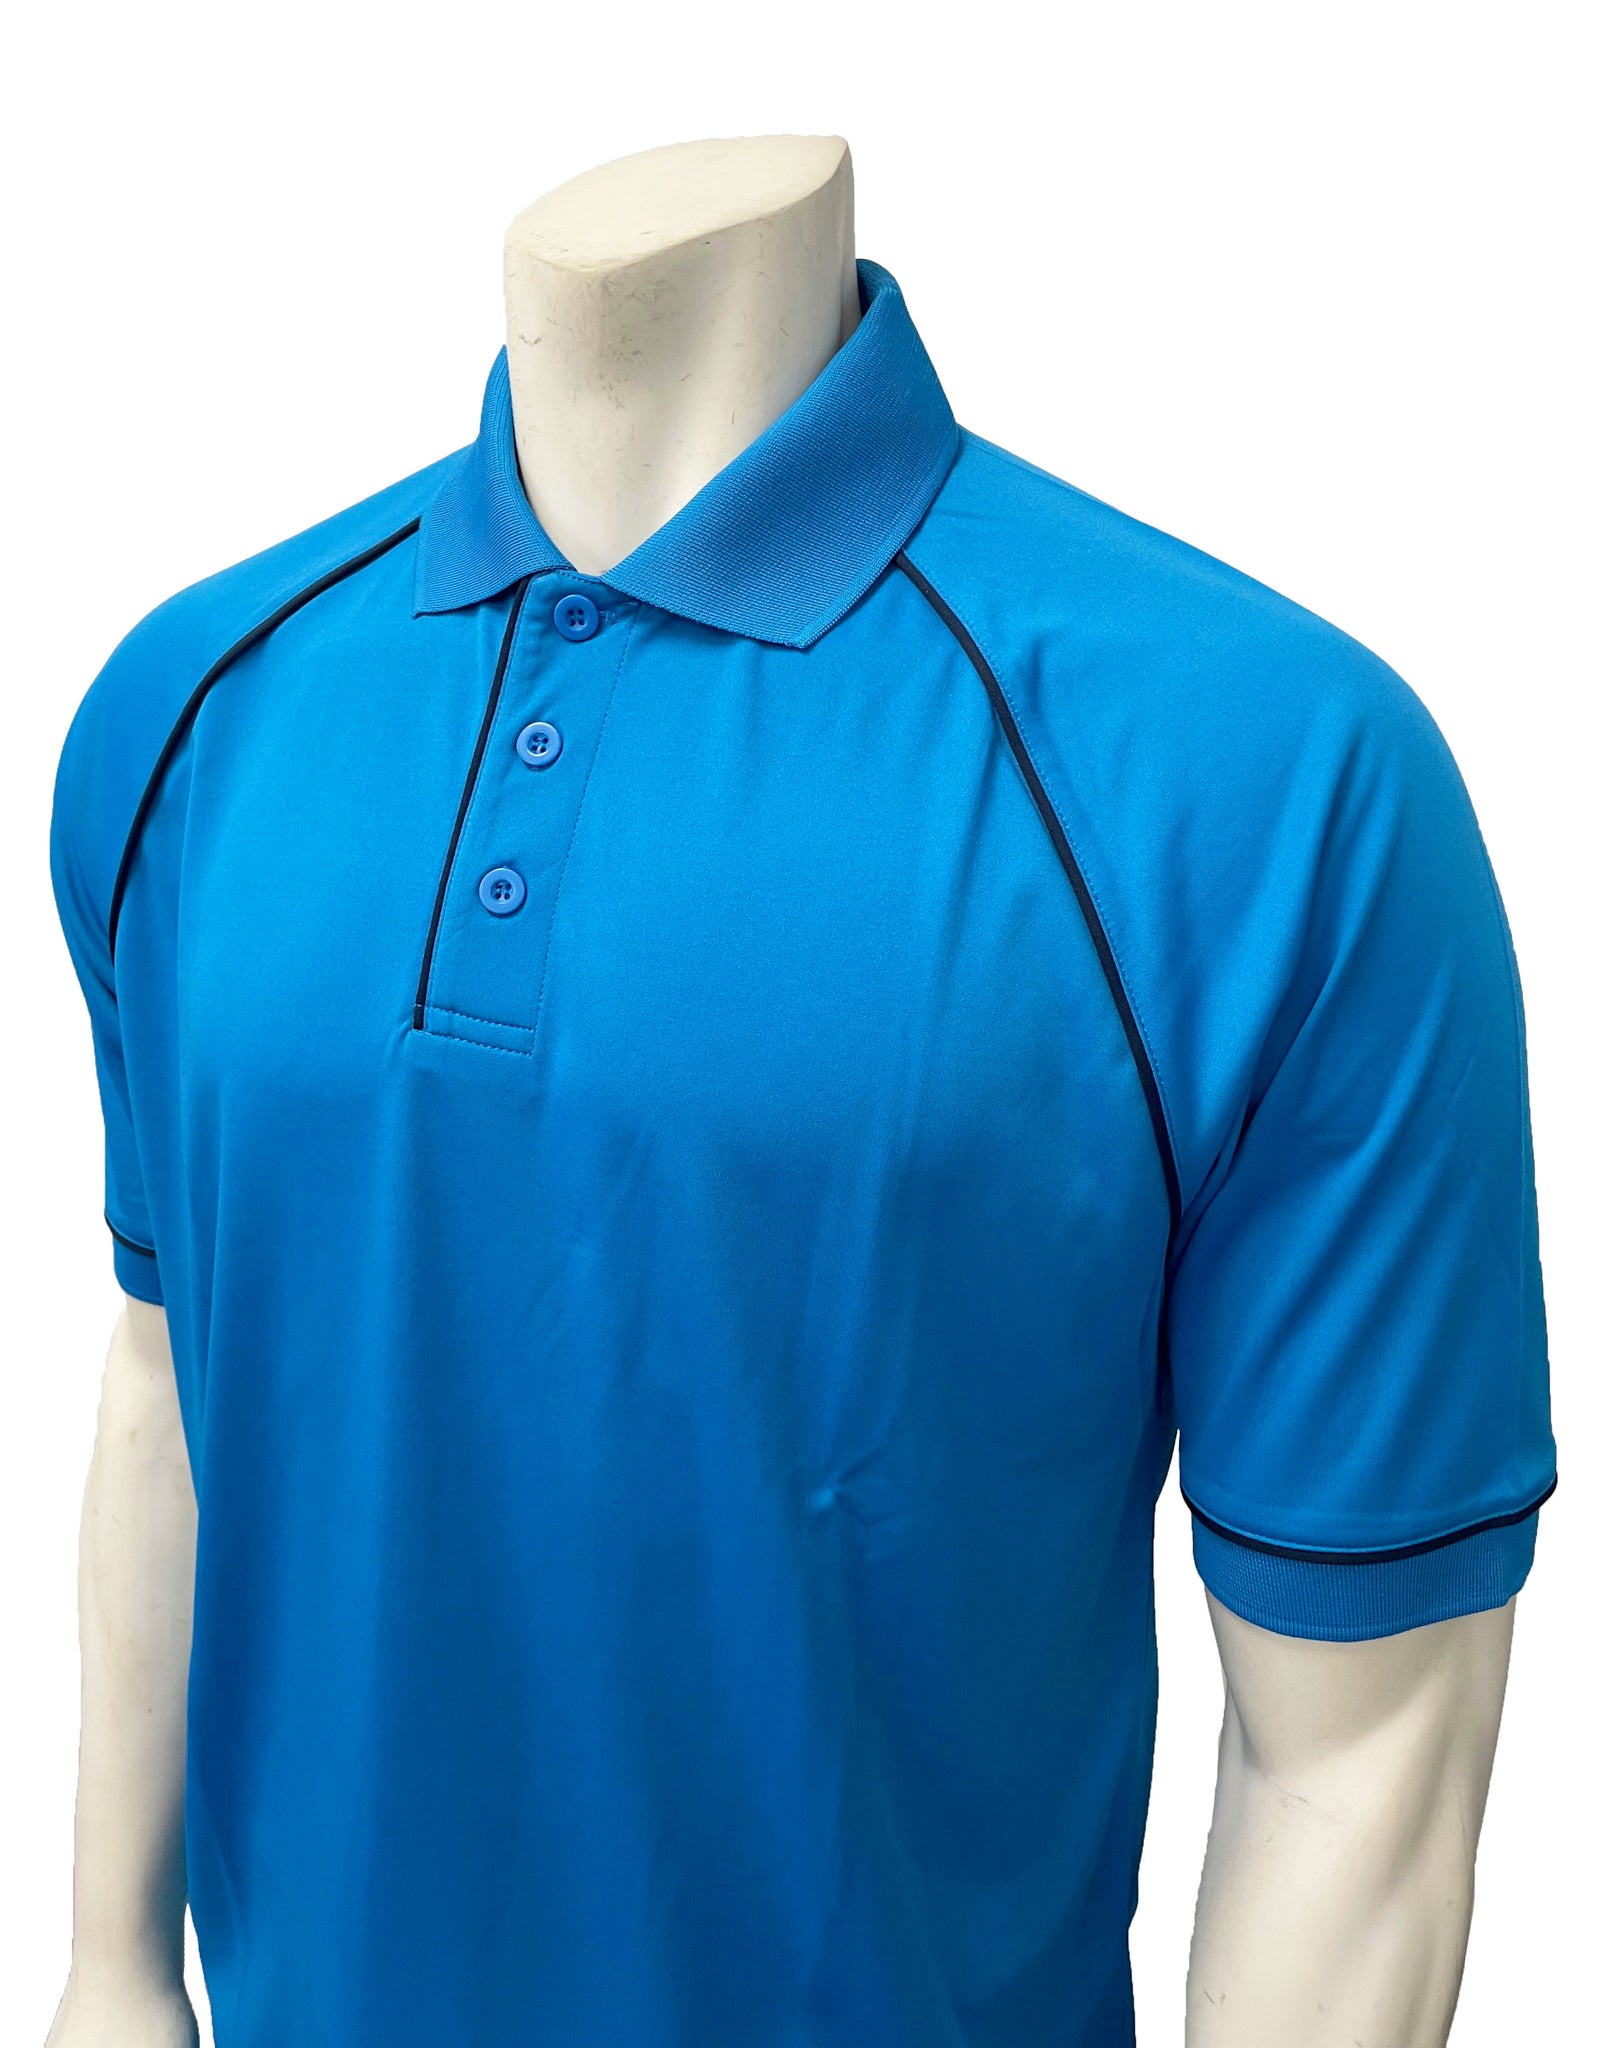 VBS-400BB - Bright Blue Mesh Shirt No Pocket